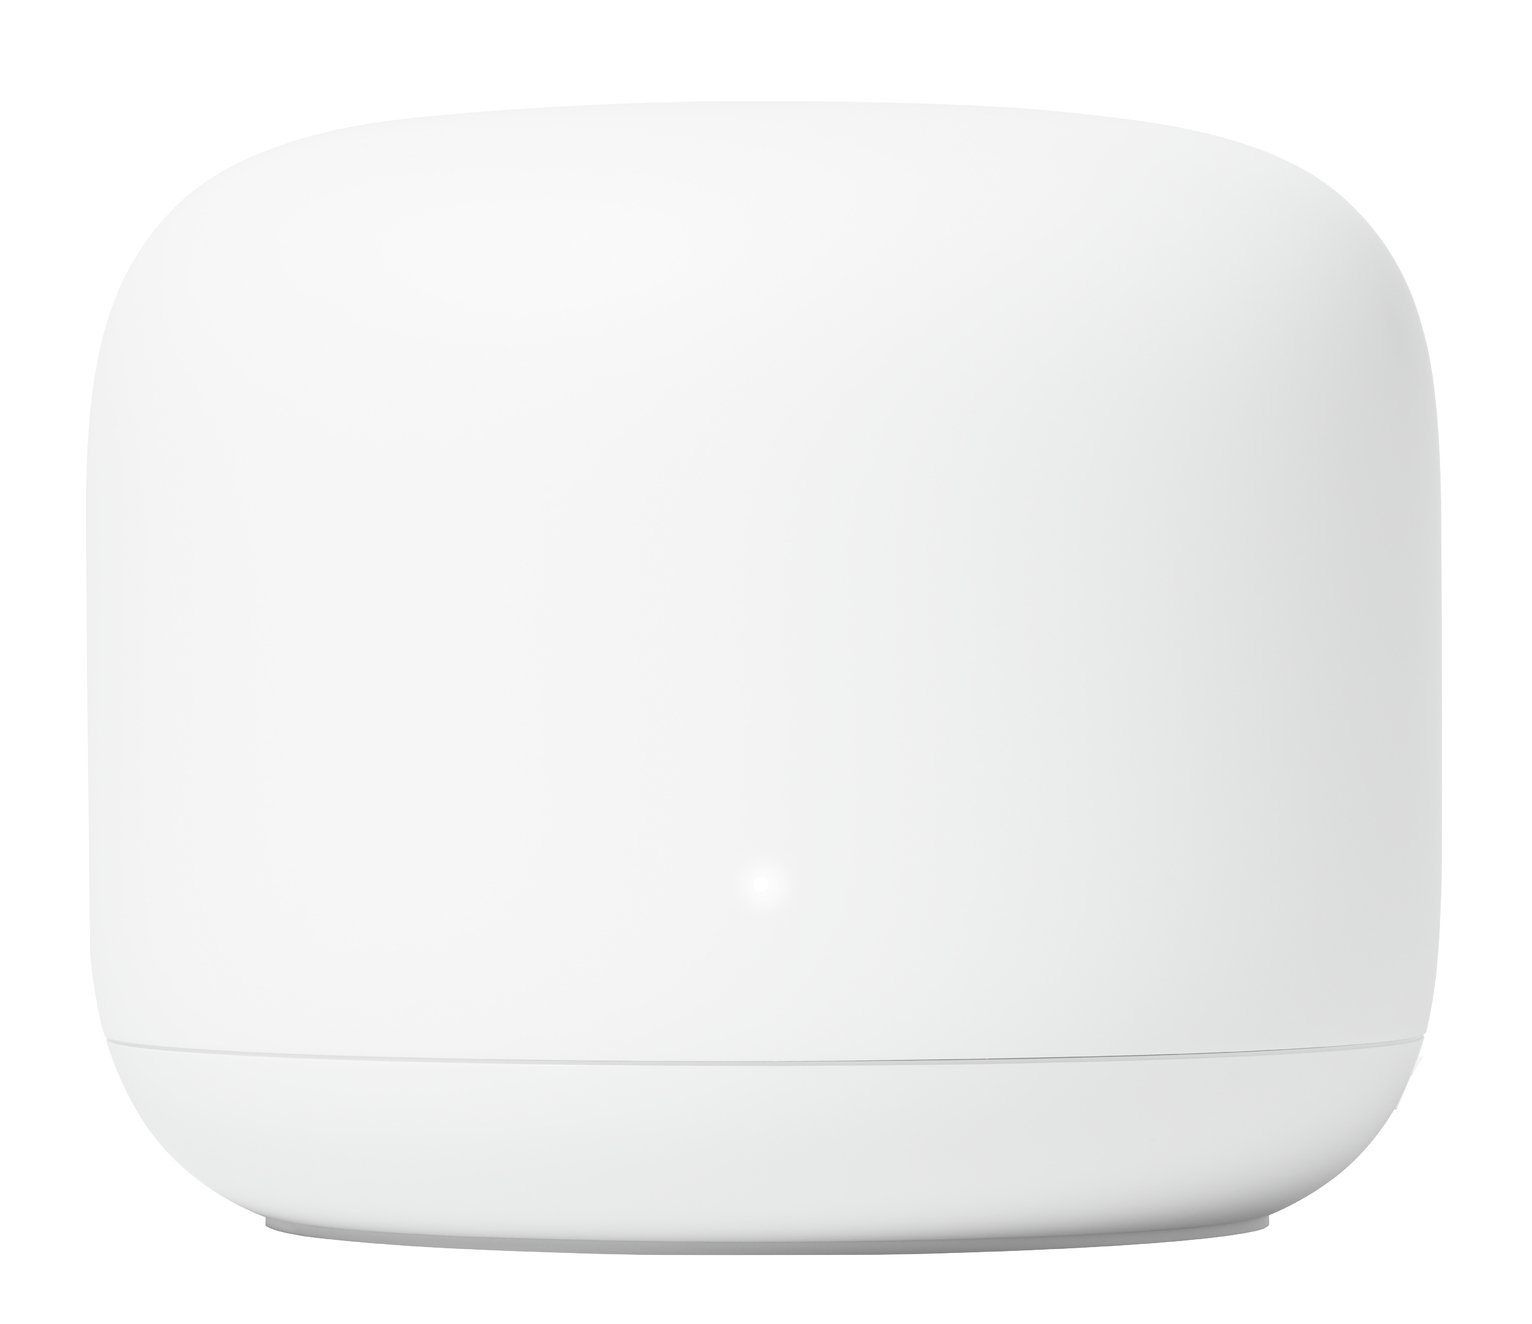 Google Nest Wi-Fi Router 